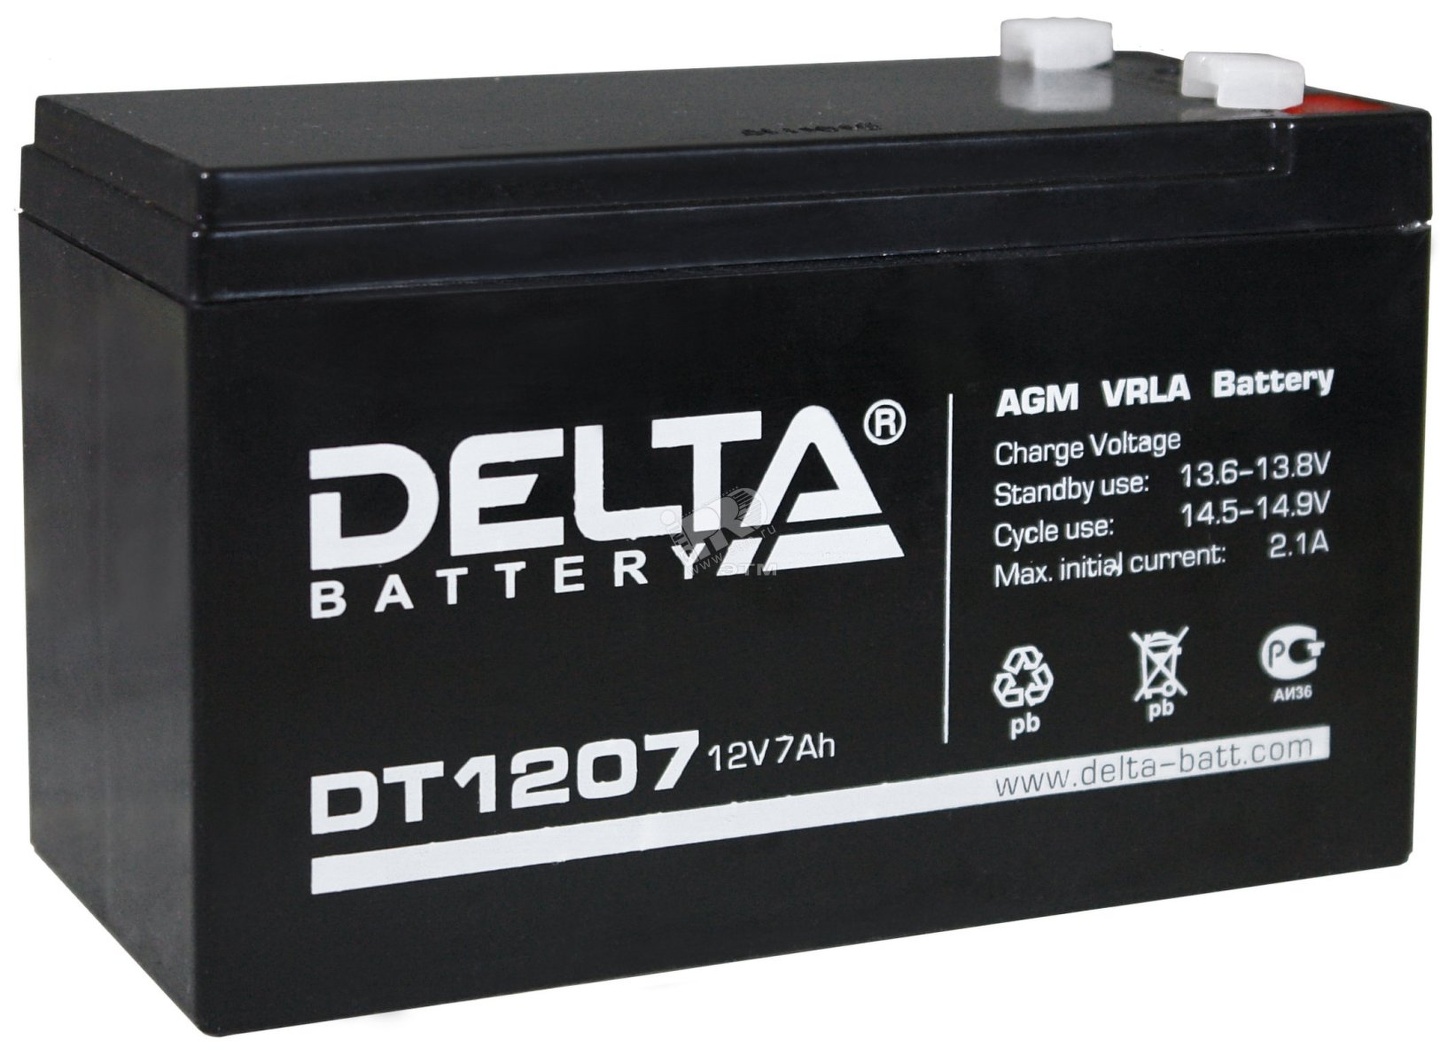 7 battery. DT 1207 аккумулятор 12в/7ач. Аккумуляторная батарея Delta DT 1207 (12v / 7ah). Delta DT-1207 (АКБ-7). Аккумулятор DTM 1207 12в 7ач.